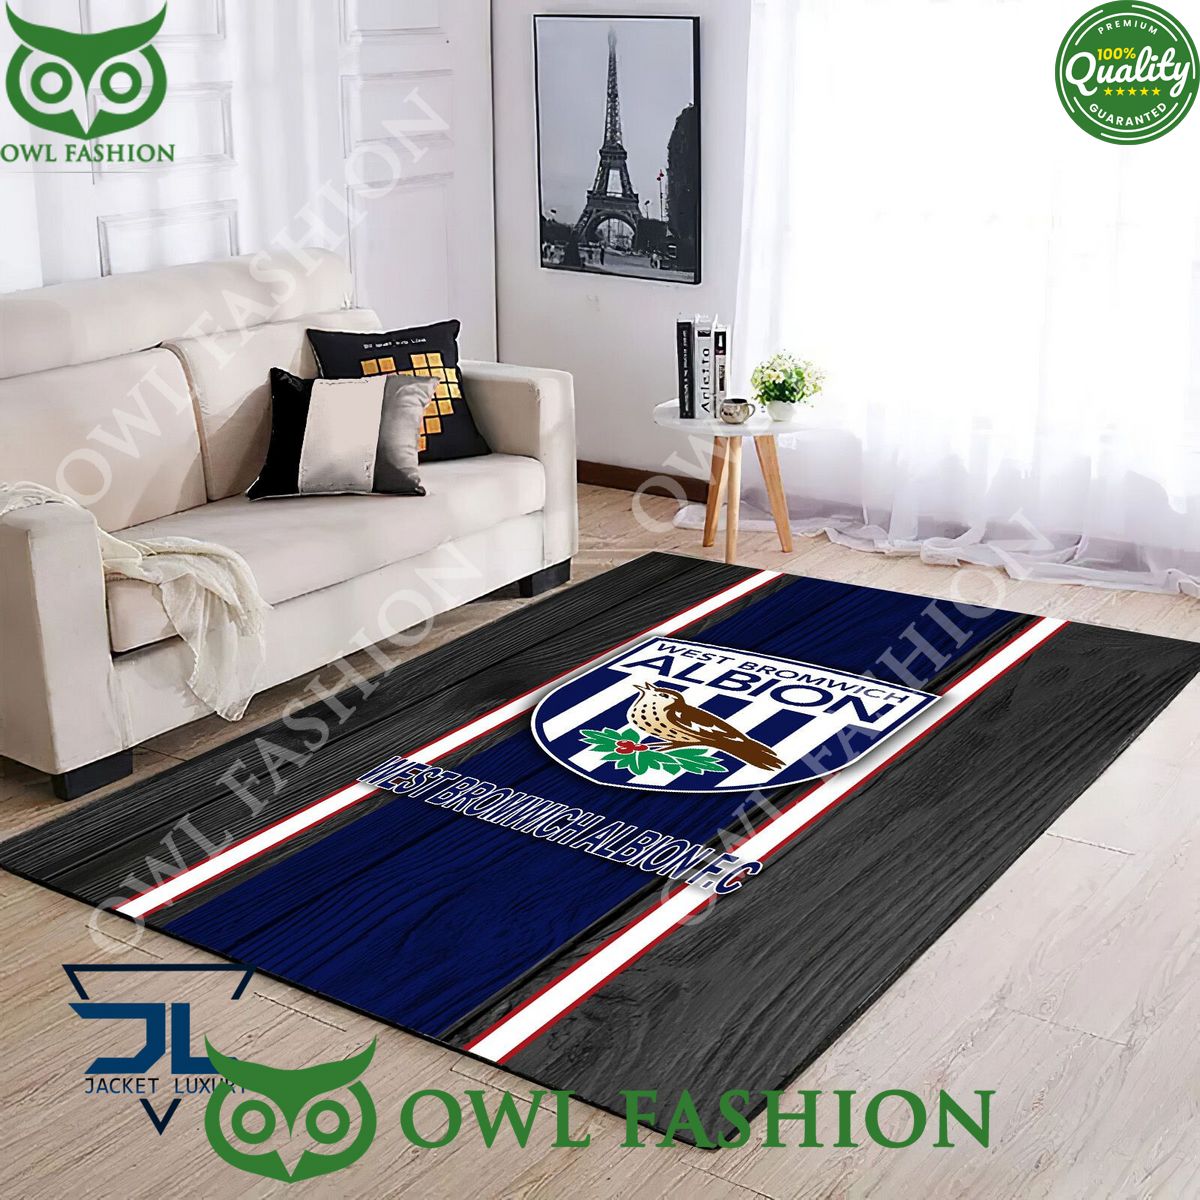 West Bromwich Albion F.C EFL Football Rug Carpet Living Room